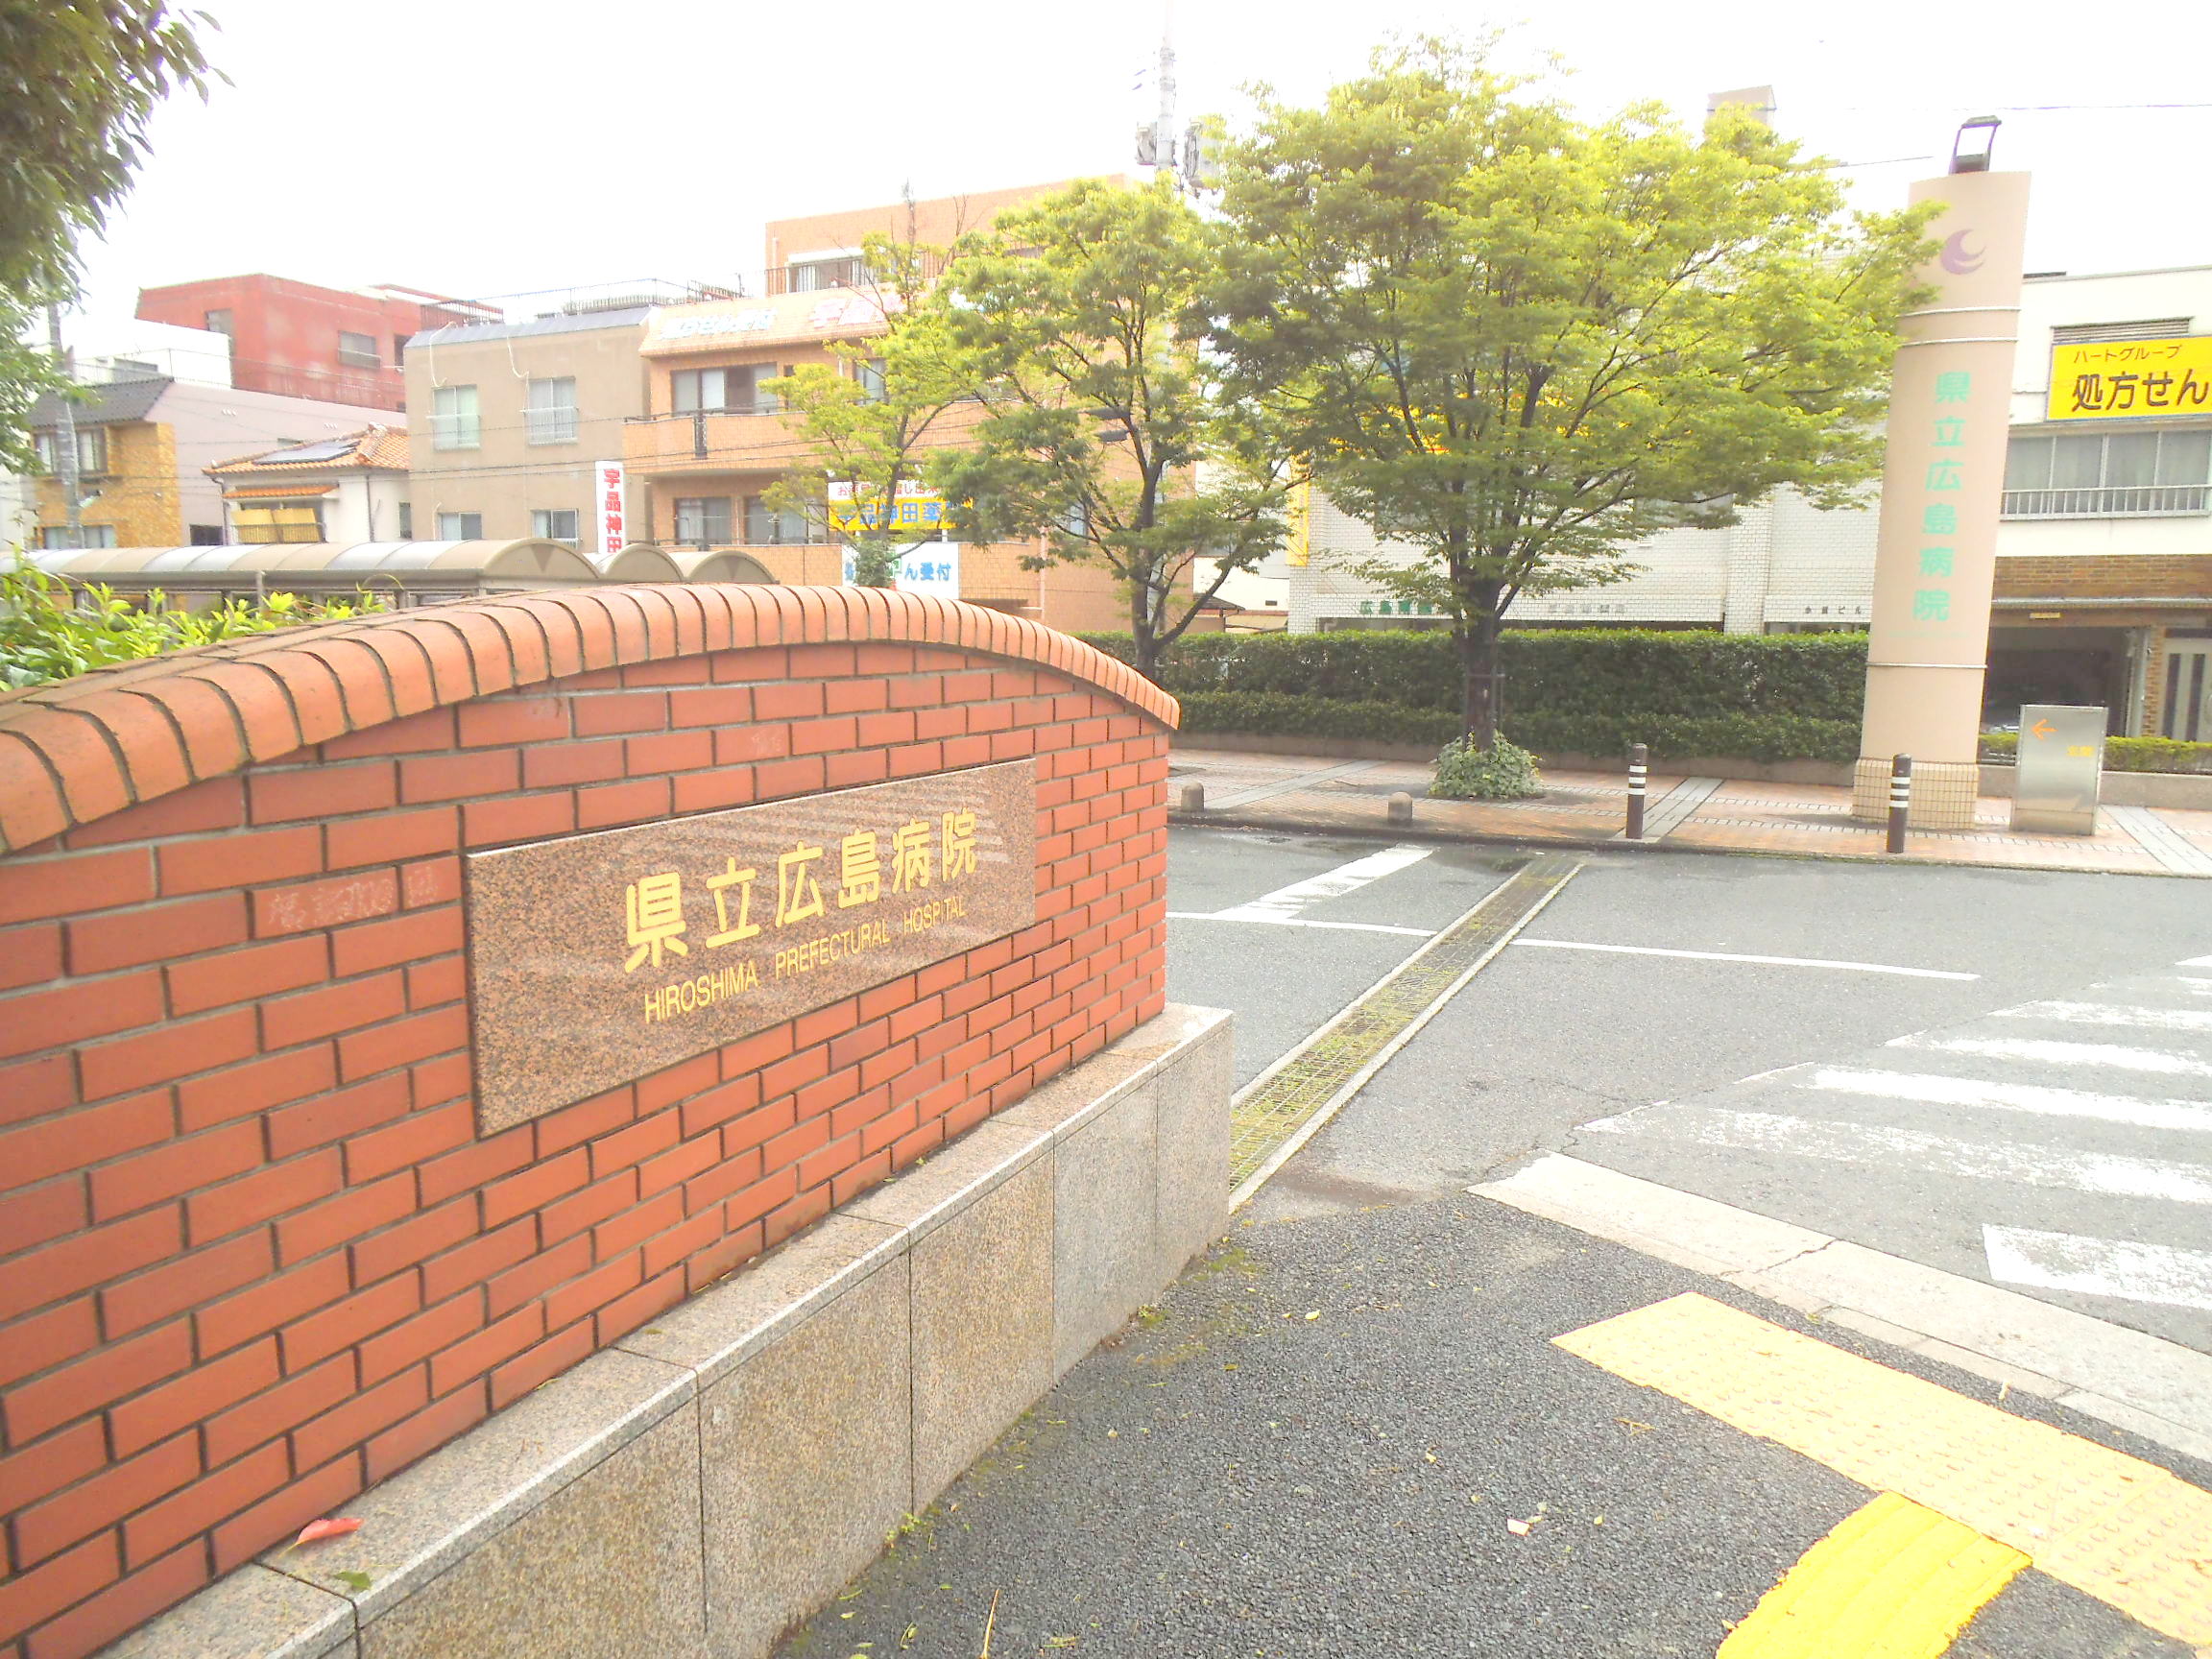 Hospital. 280m to Hiroshima Prefectural Hospital (Hospital)